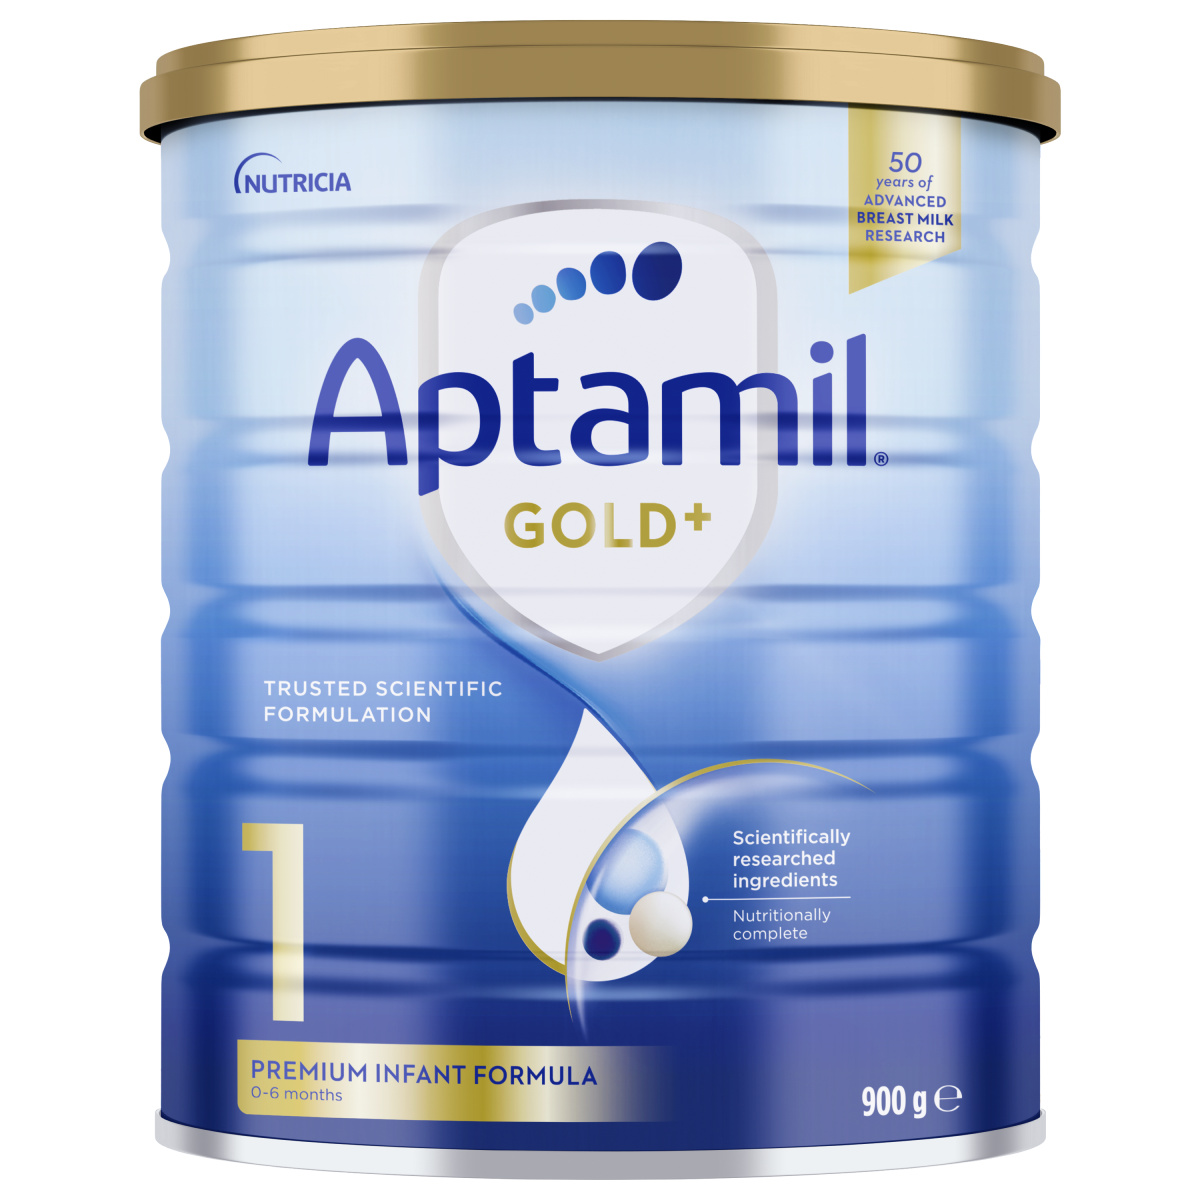 Aptamil 3 Growing Up Milk Ready to Feed 1+ Years Liquid 200ml